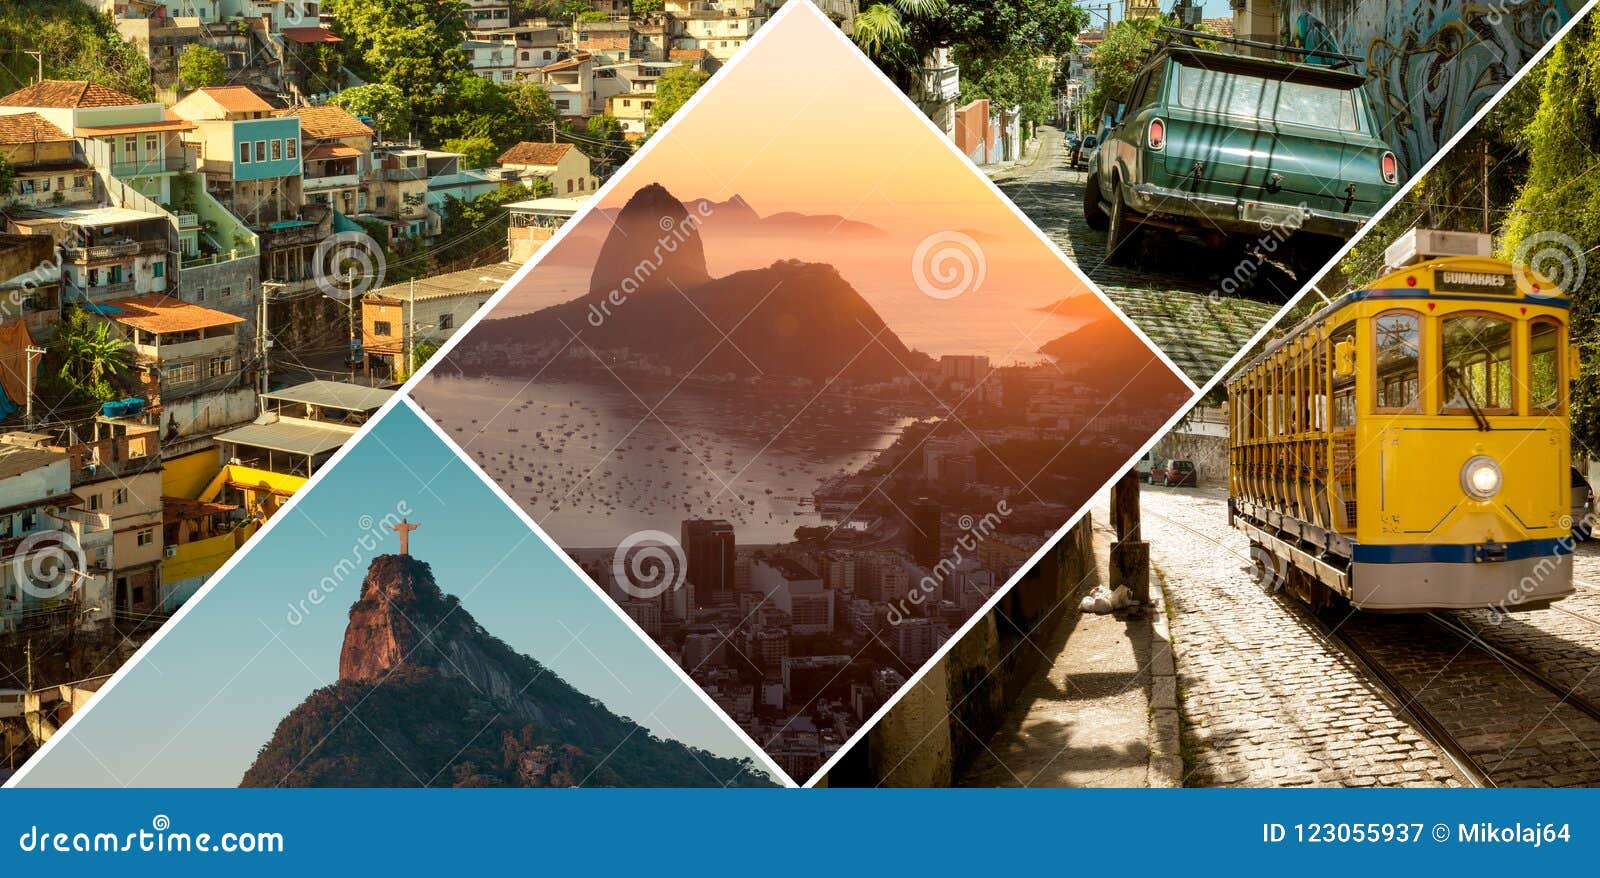 collage of main tourists destinations in rio de janeiro